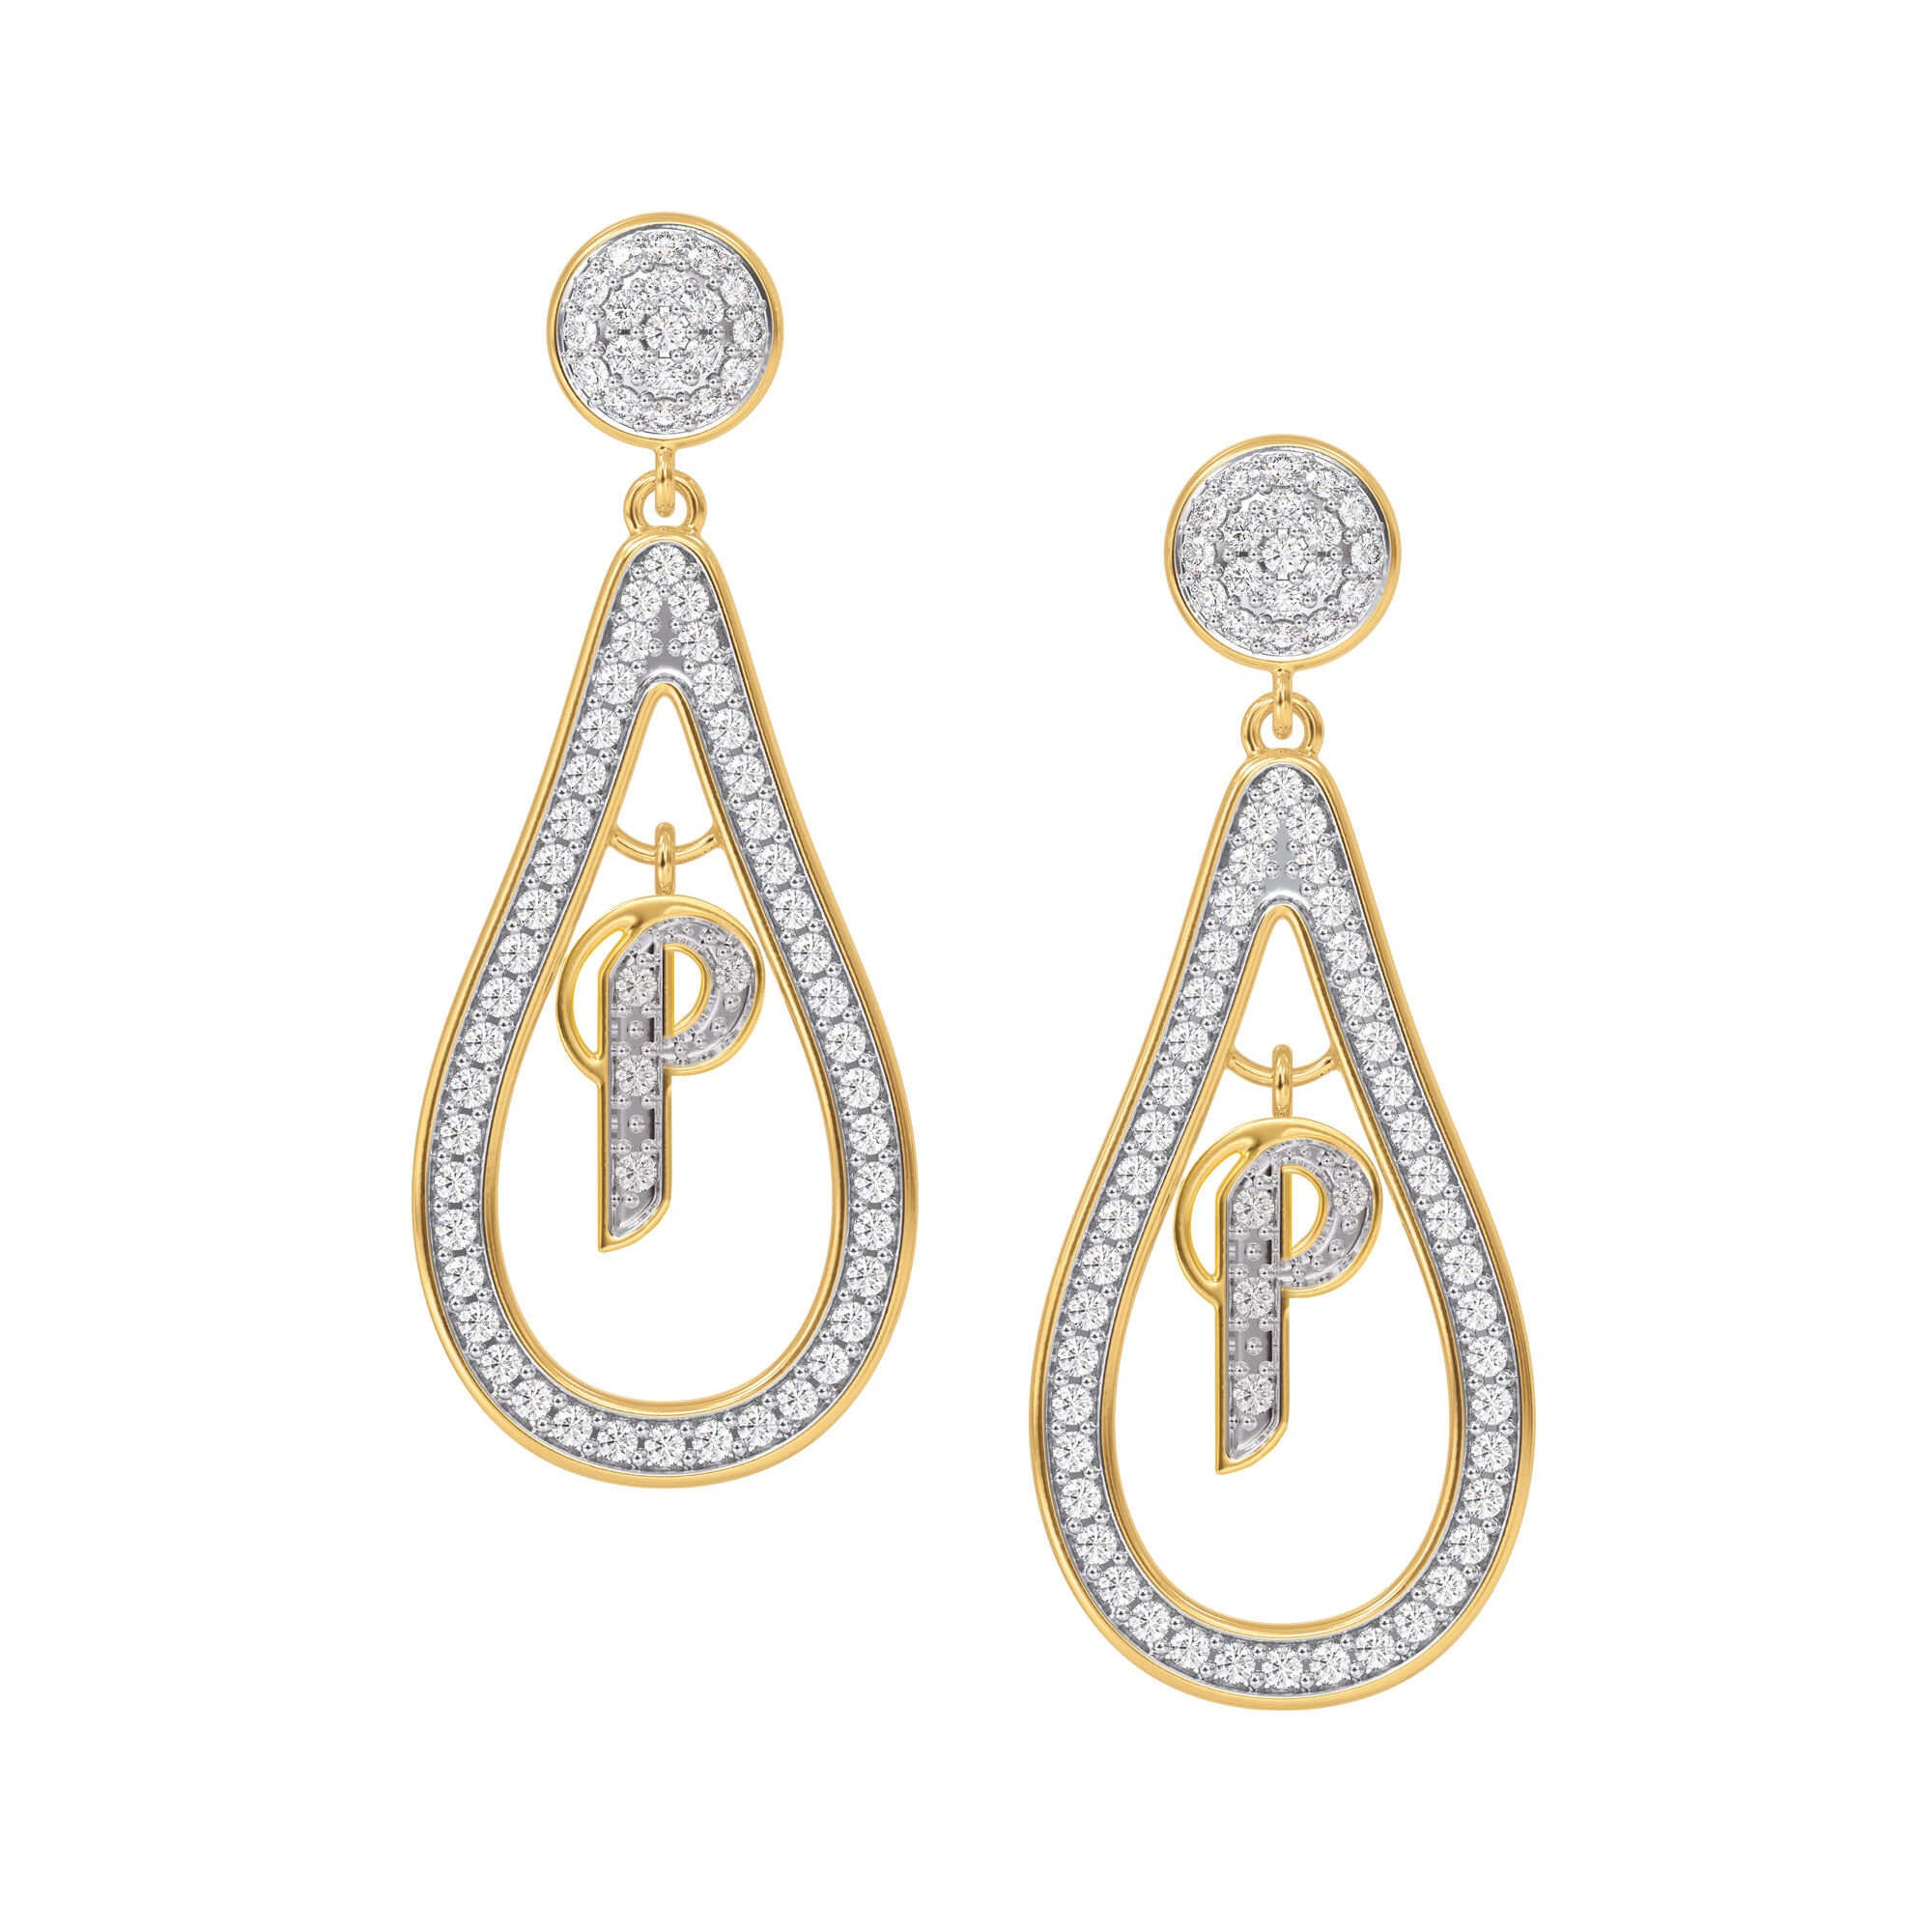 Jewelry Women's Earrings 14k White Gold 0.003 ct Diamond Initial C Button,  7 mm | eBay